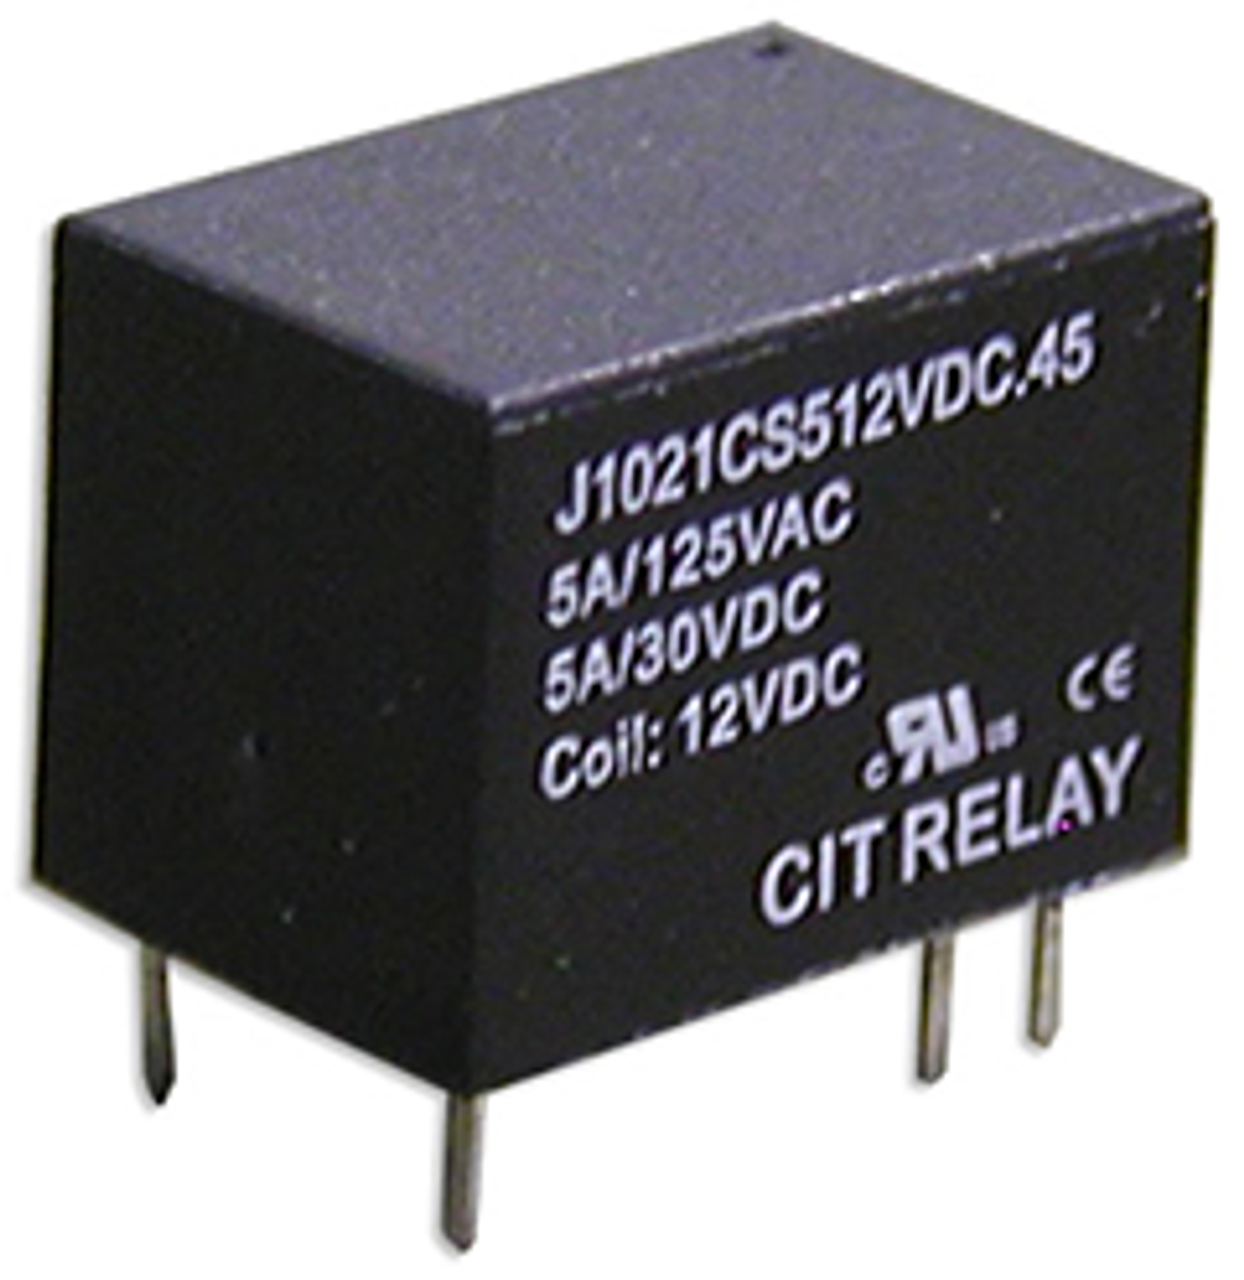 CIT Relay and Switch J1021CS324VDC.36 Power Relays